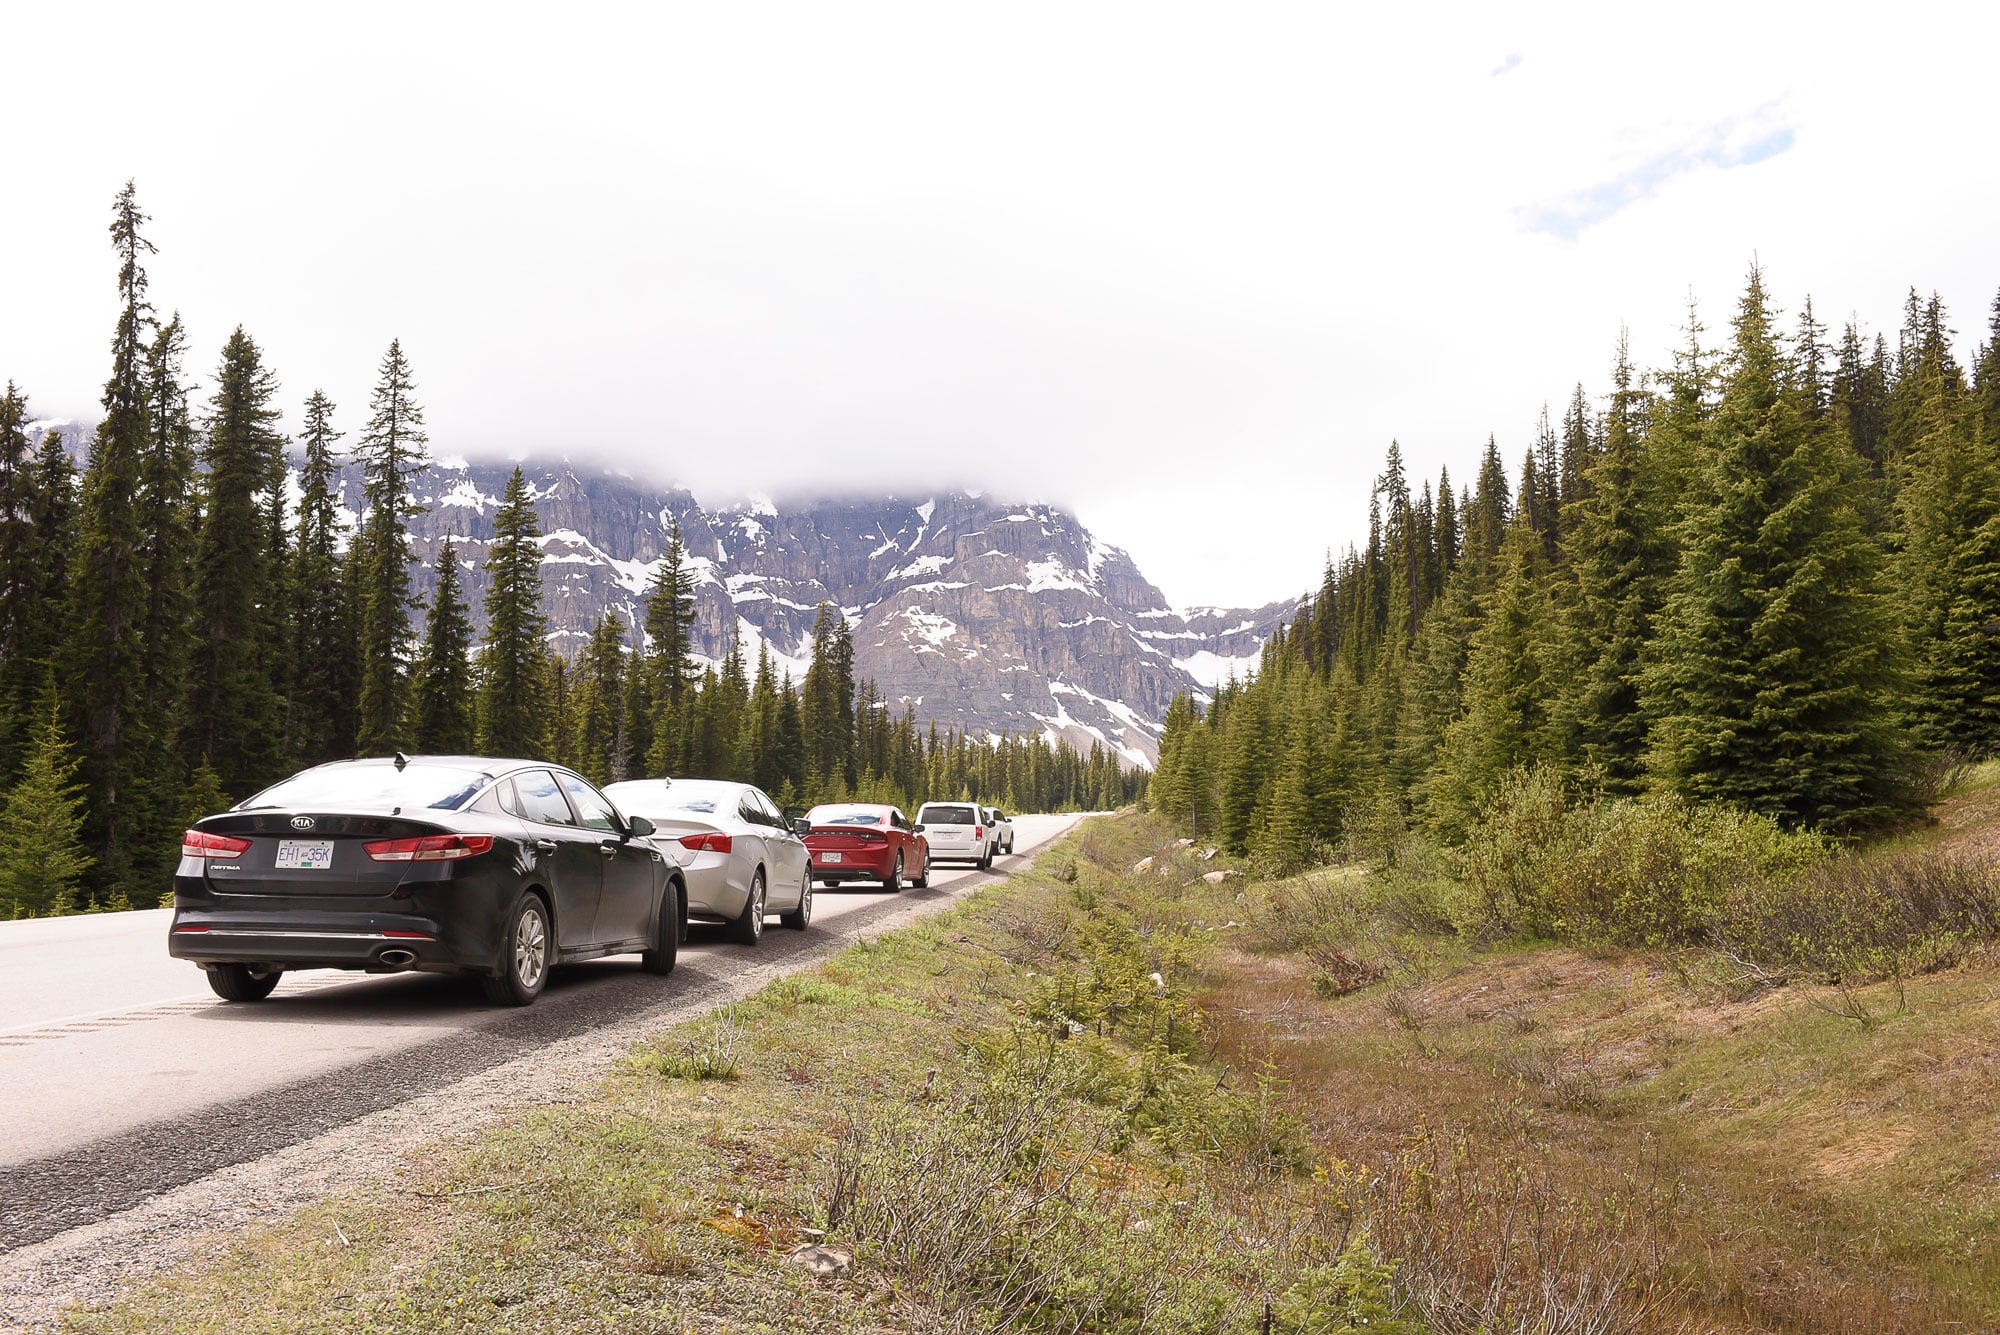 Estrada para chegar ao Parque Nacional de Banff